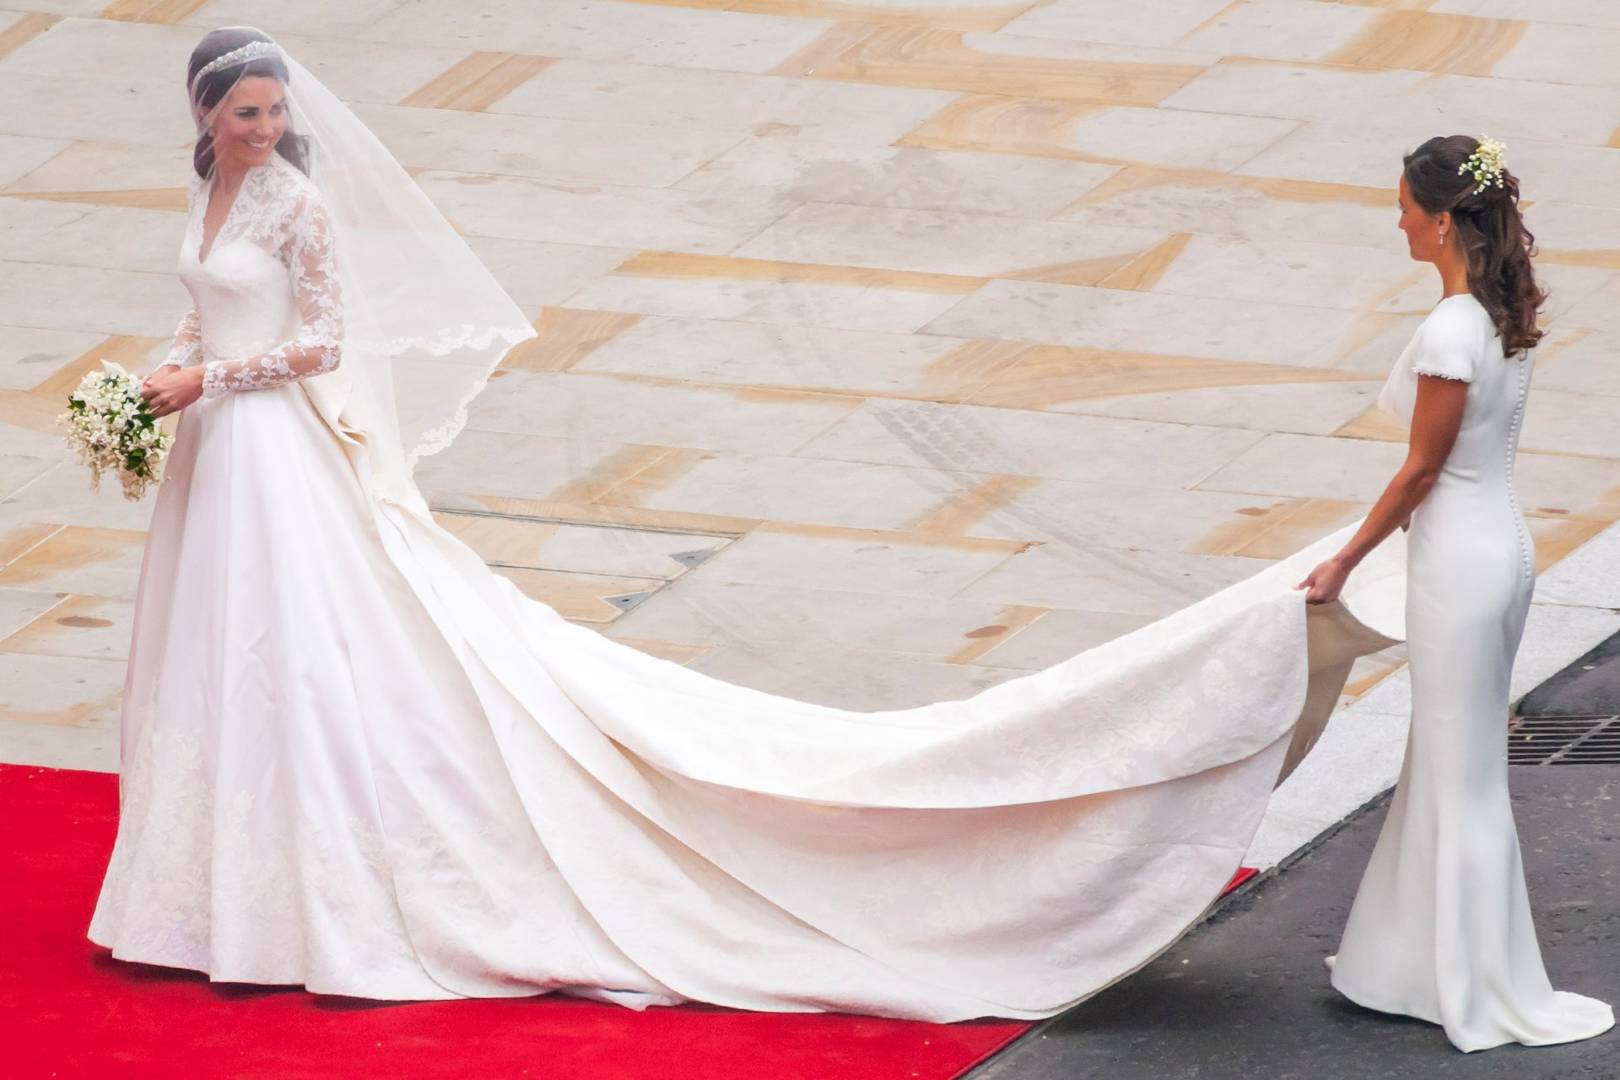 Wedding of Prince William and Kate Middleton photos | Tatler